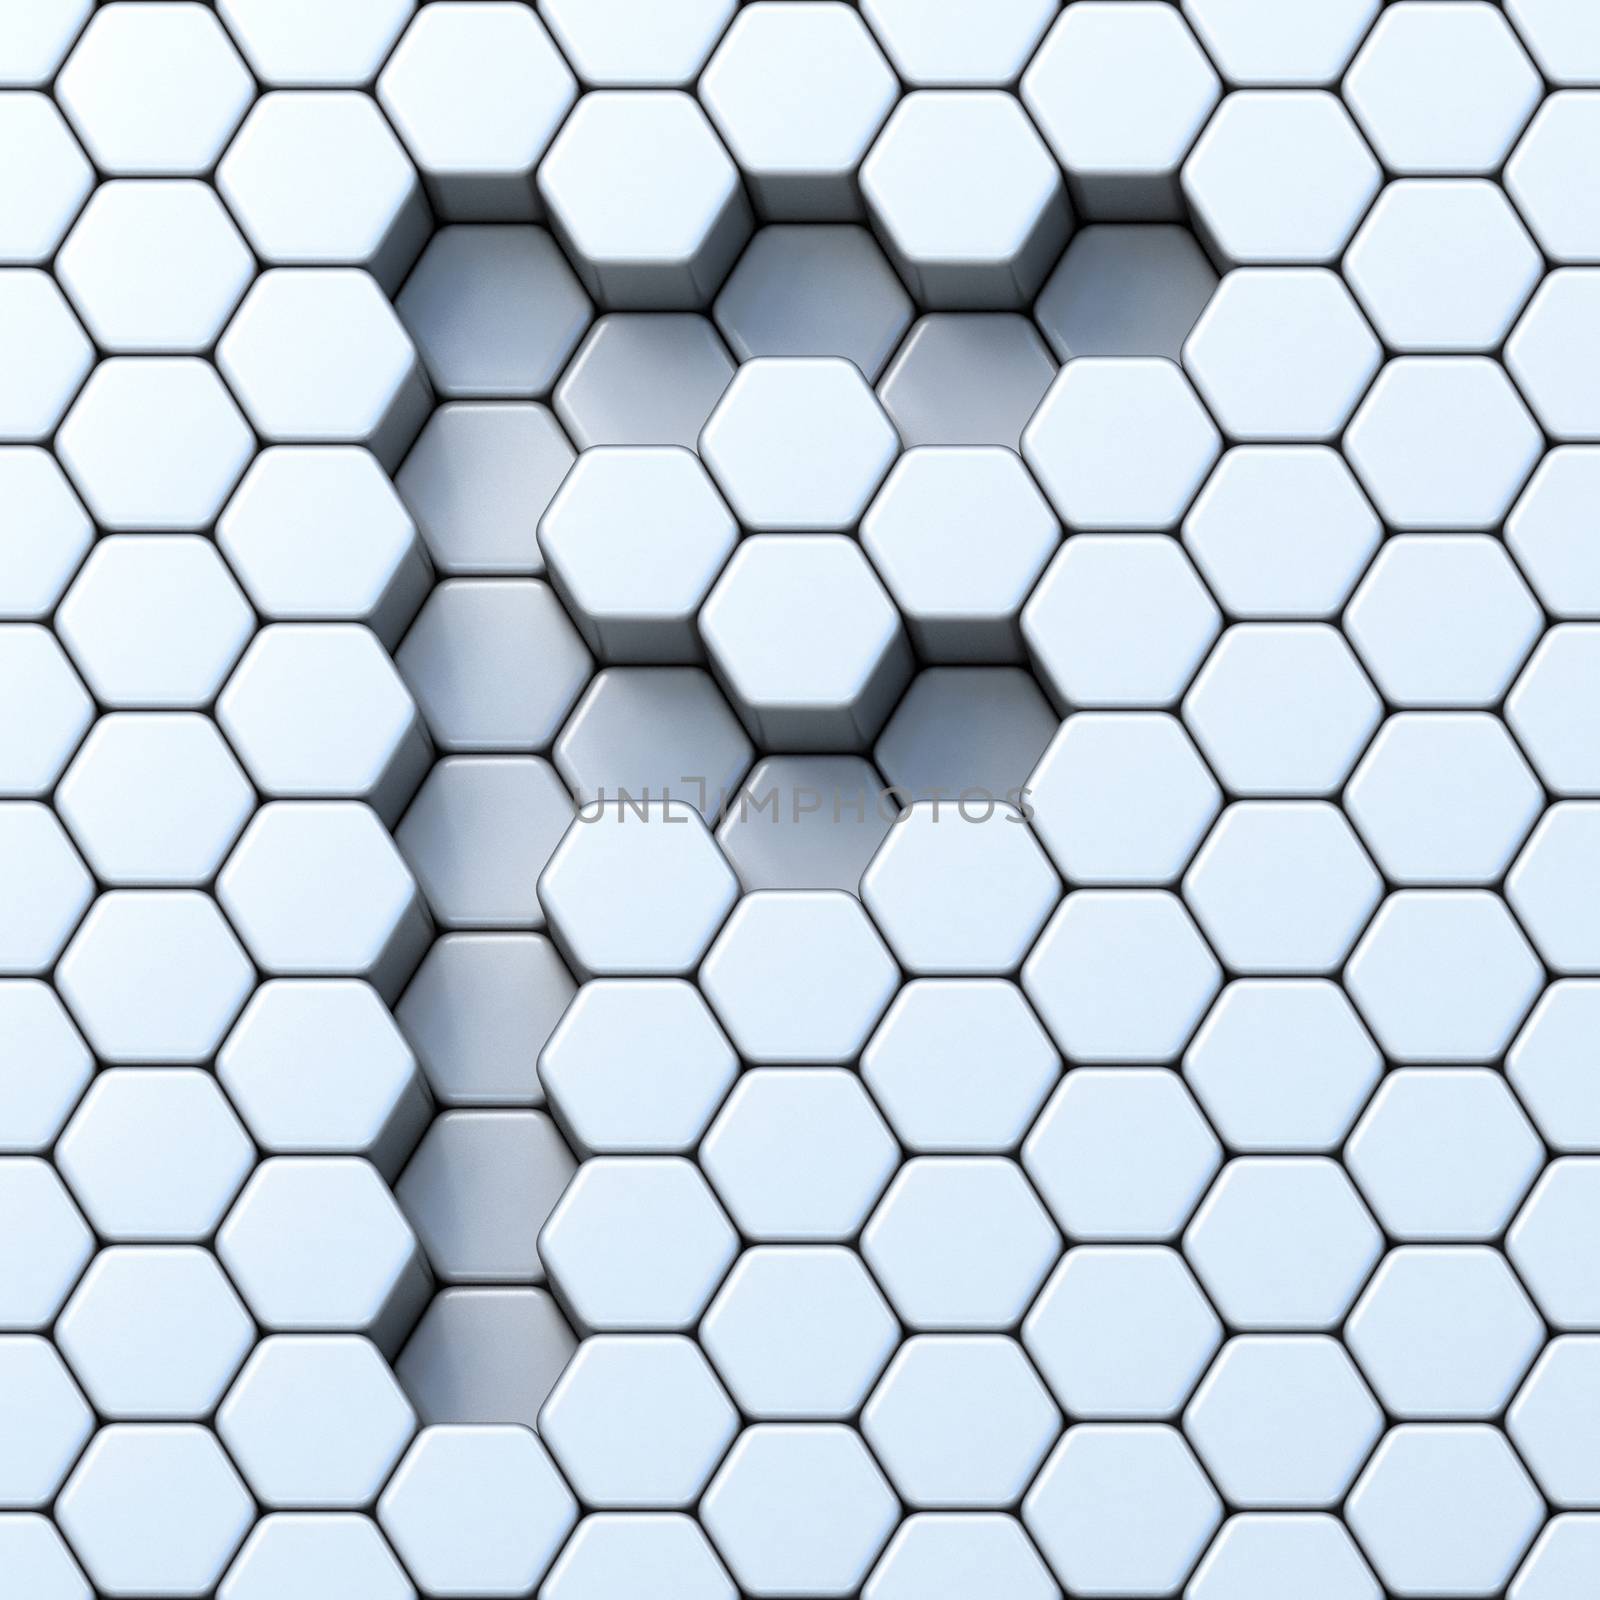 Hexagonal grid letter F 3D by djmilic